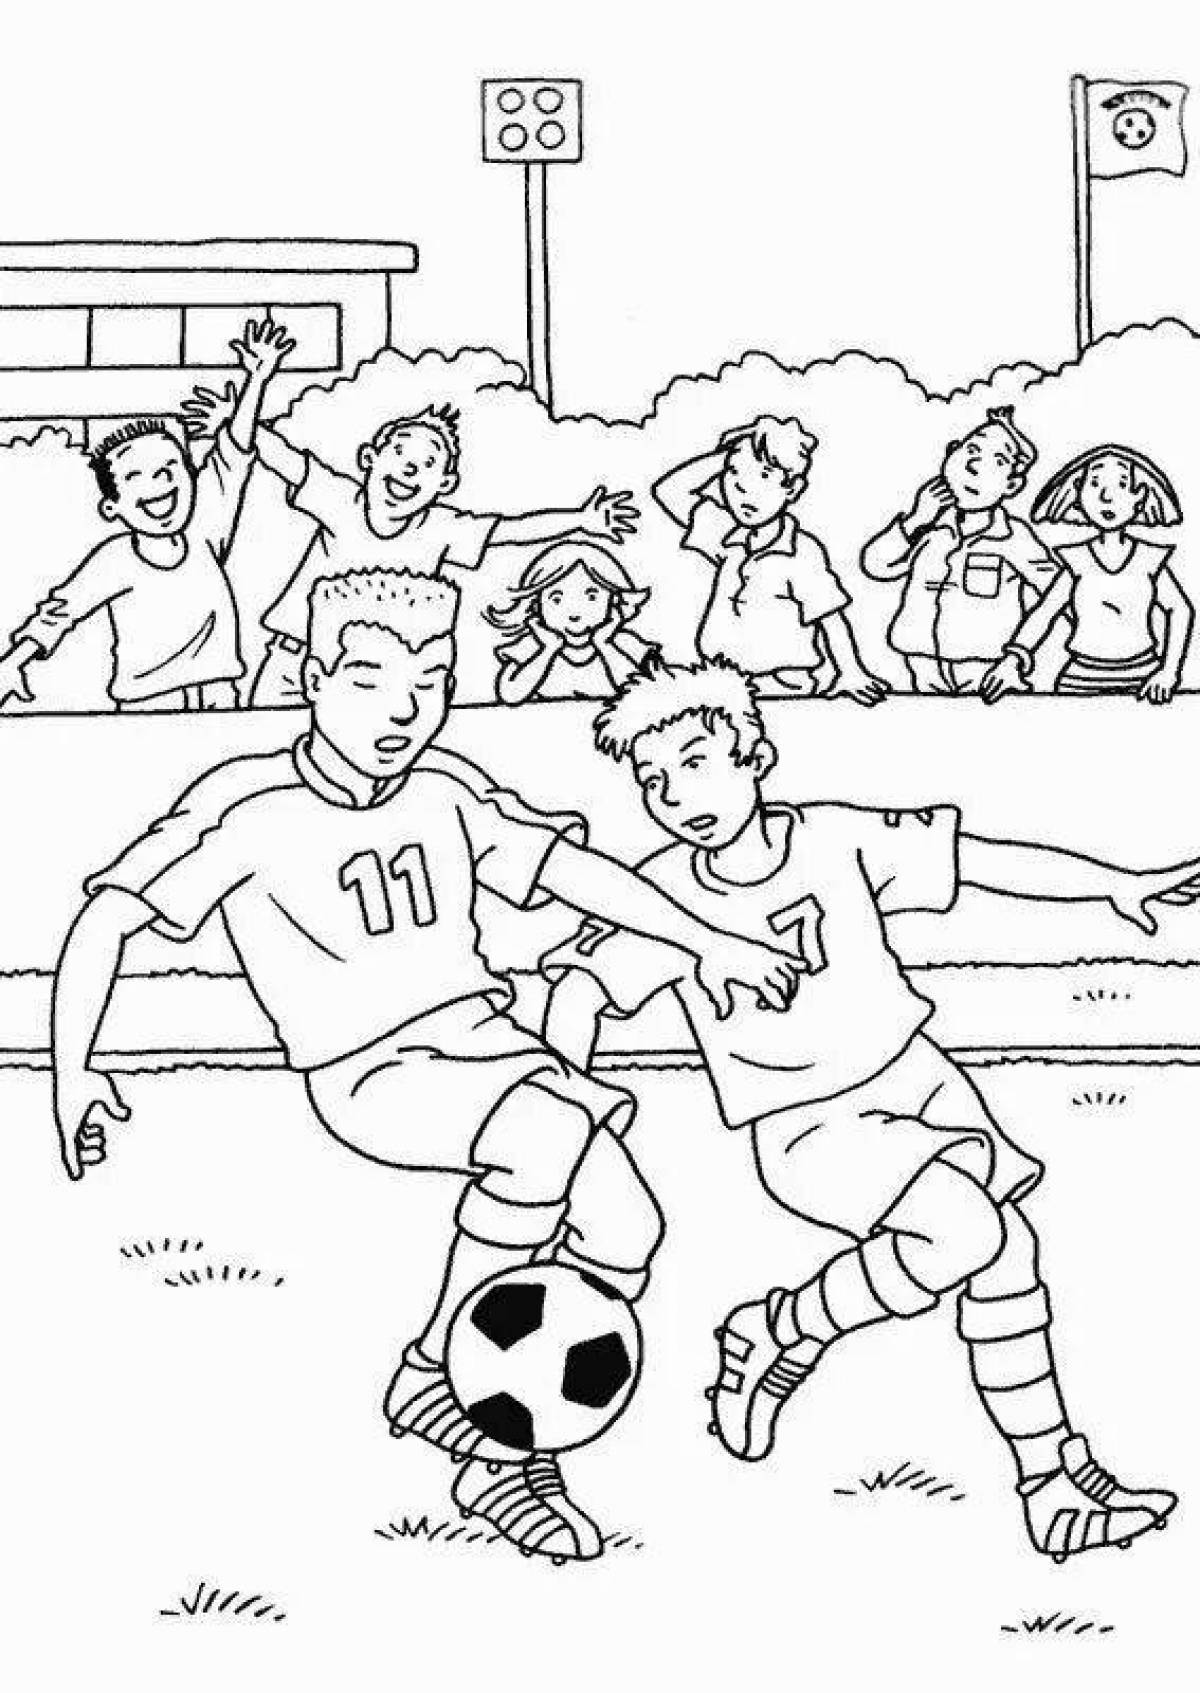 Coloring page joyful football for boys